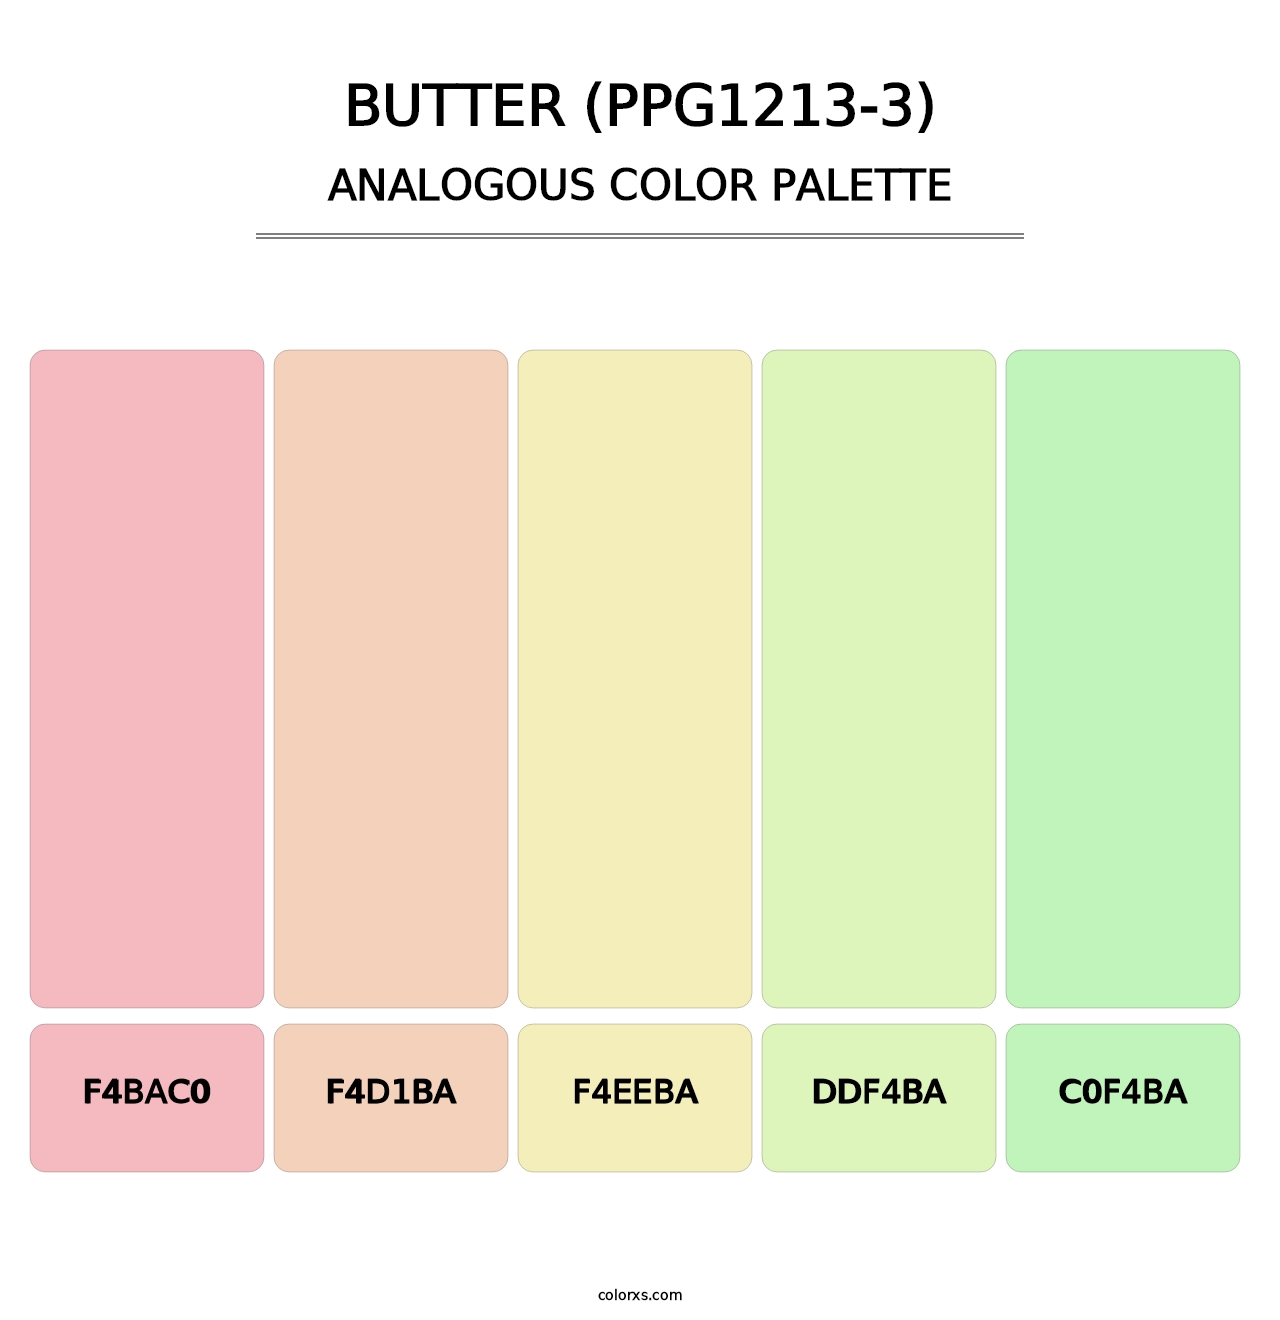 Butter (PPG1213-3) - Analogous Color Palette